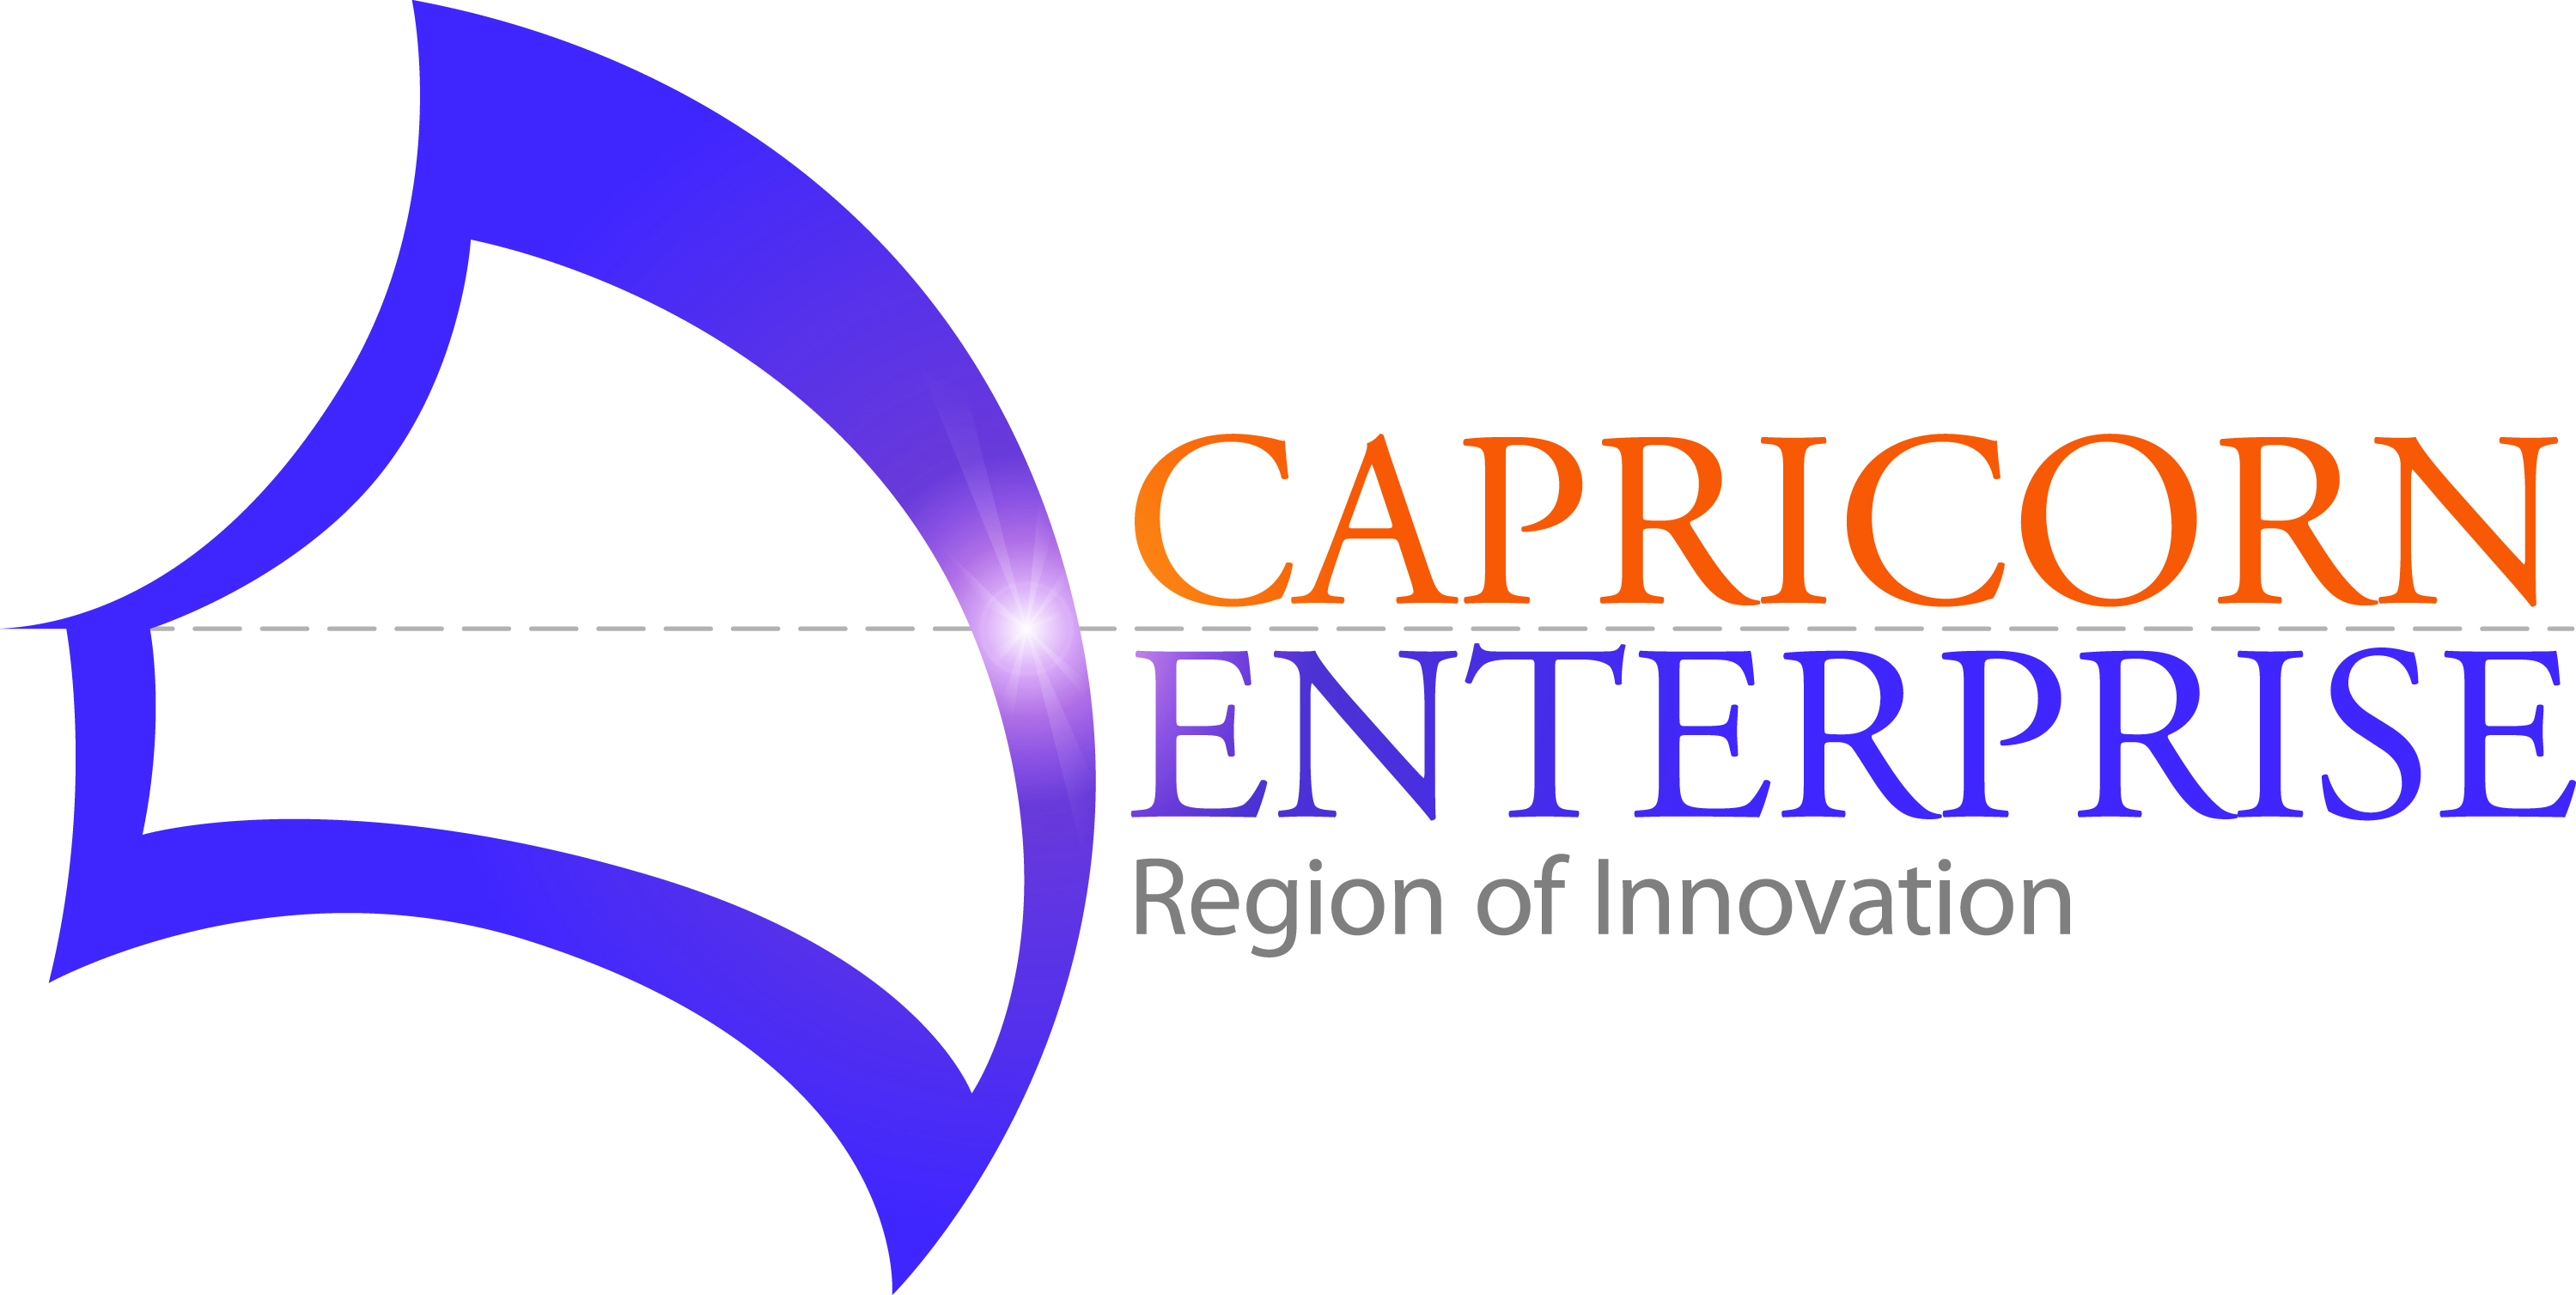 Capricorn Enterprise